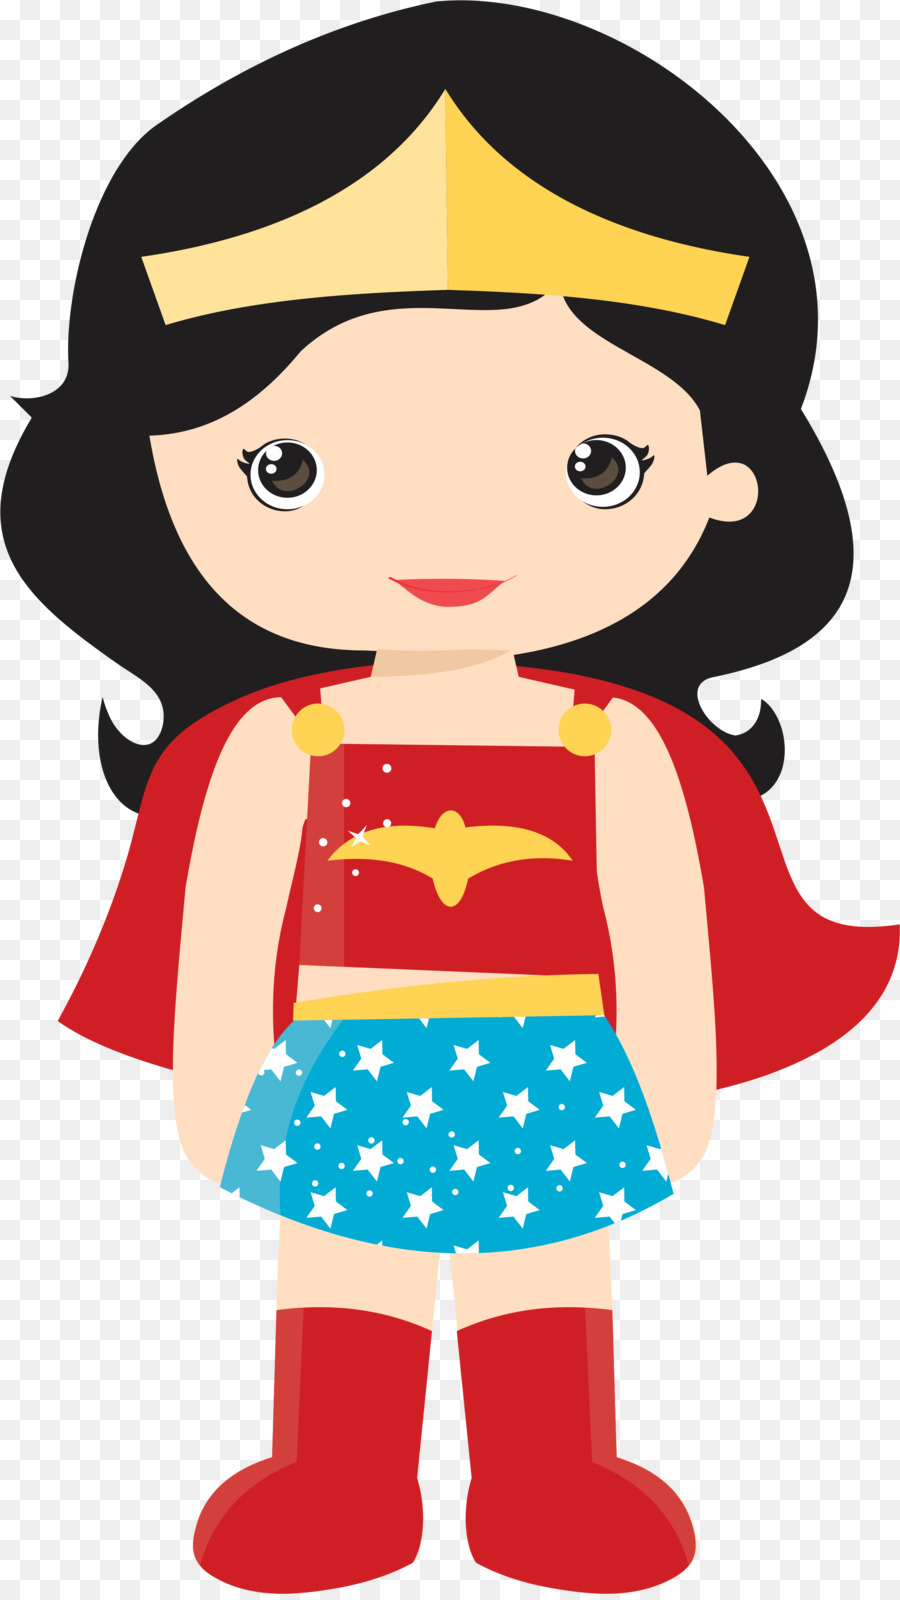 Diana Prince Batgirl Superhero Clip art - Women Baby Cliparts png download - 2391*4236 - Free Transparent  png Download.